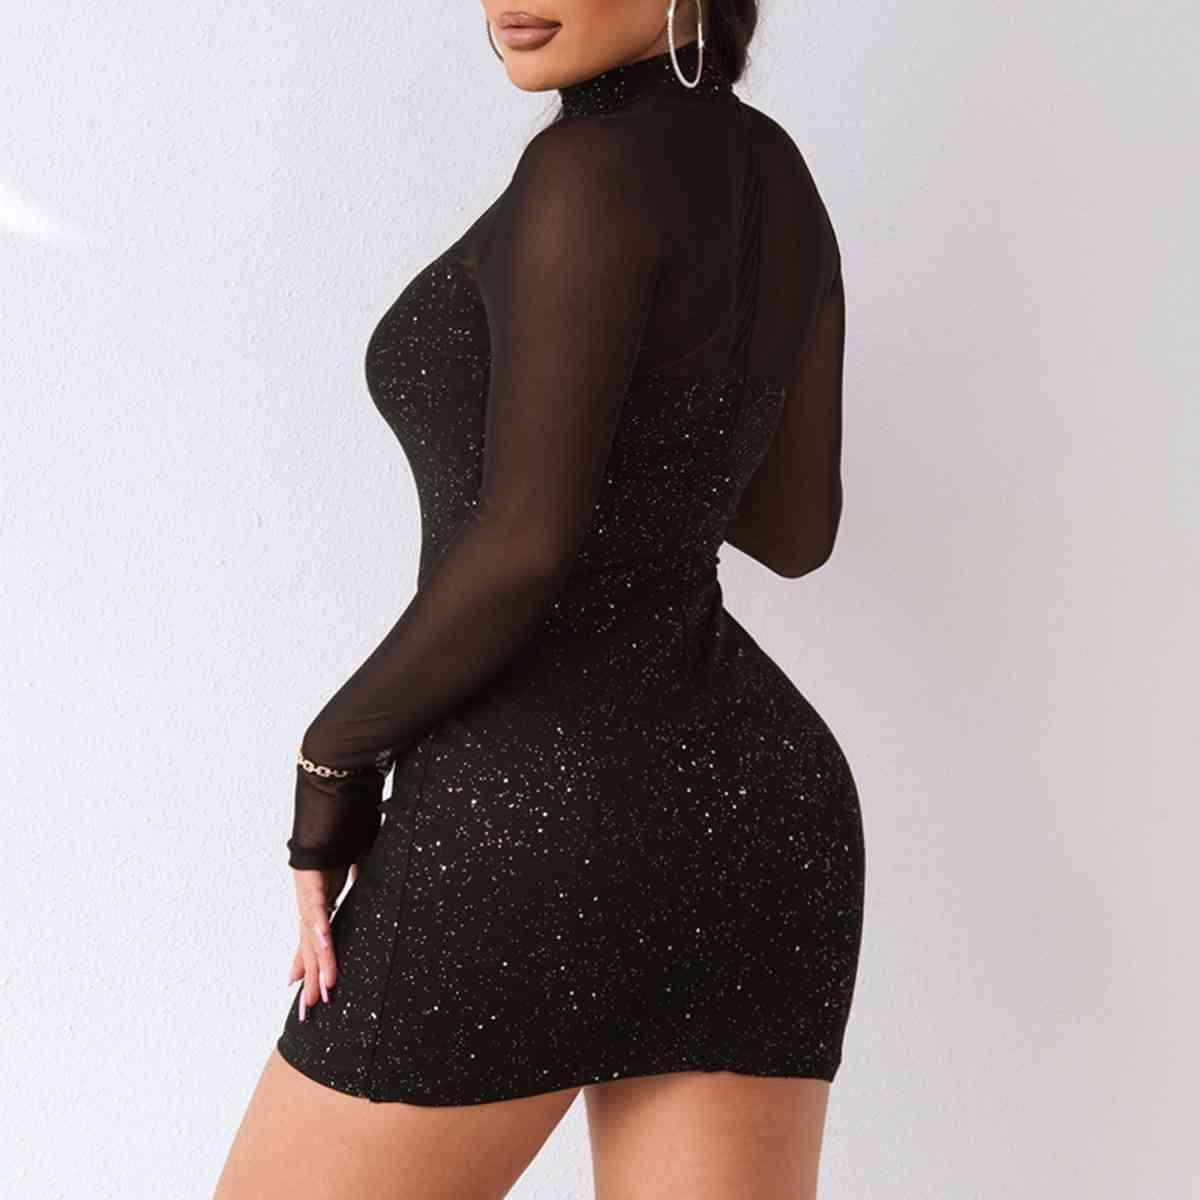 a woman in a short black dress